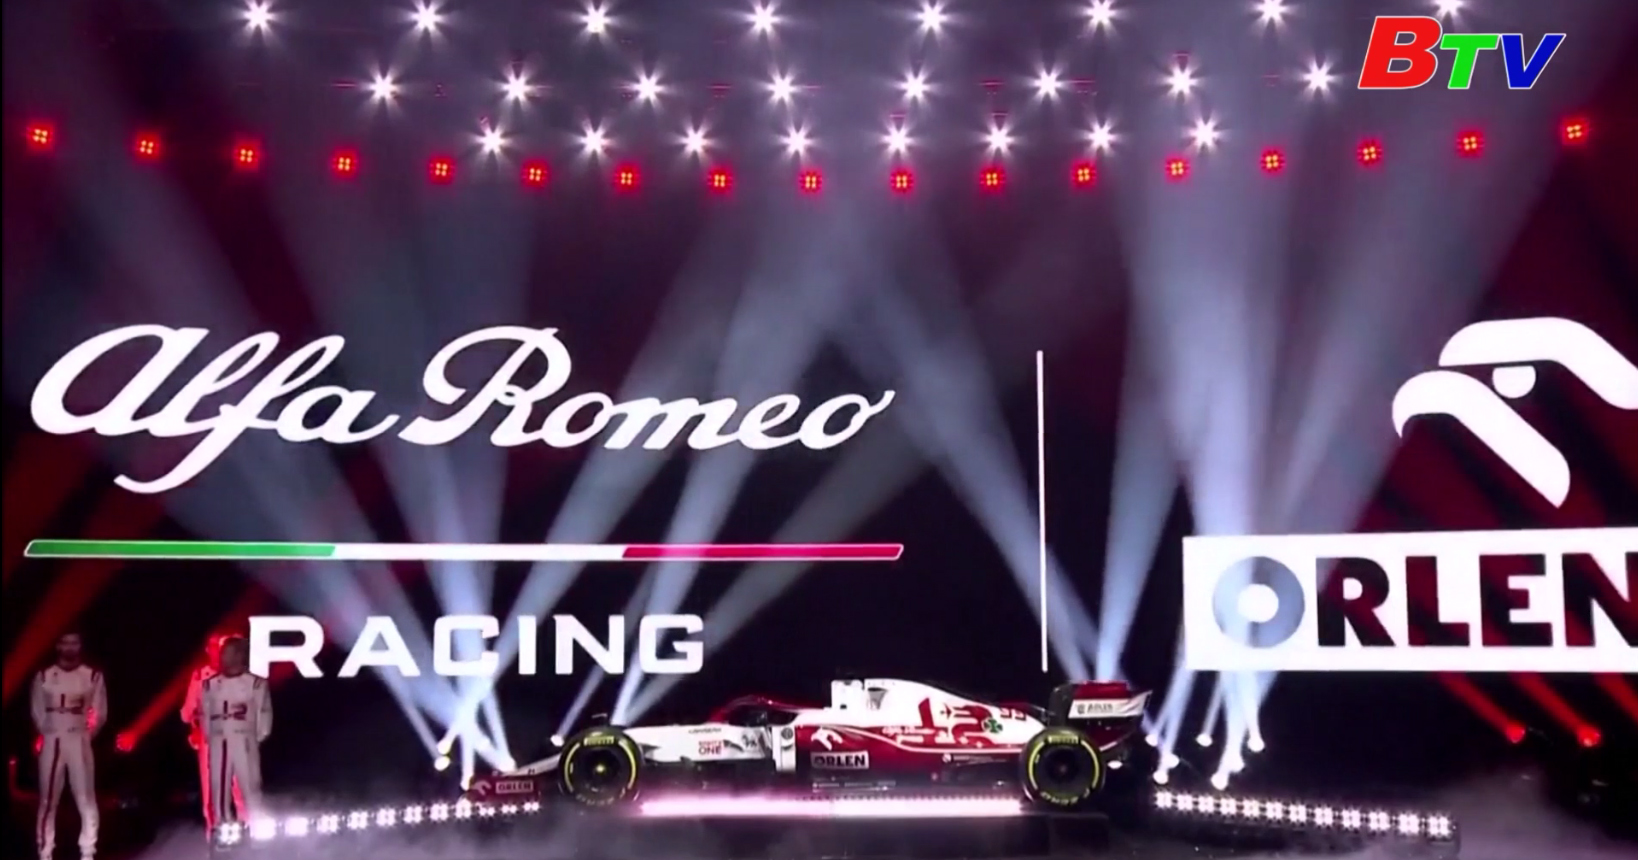 Alpha Romeo ra mắt xe mùa giải F1 2021